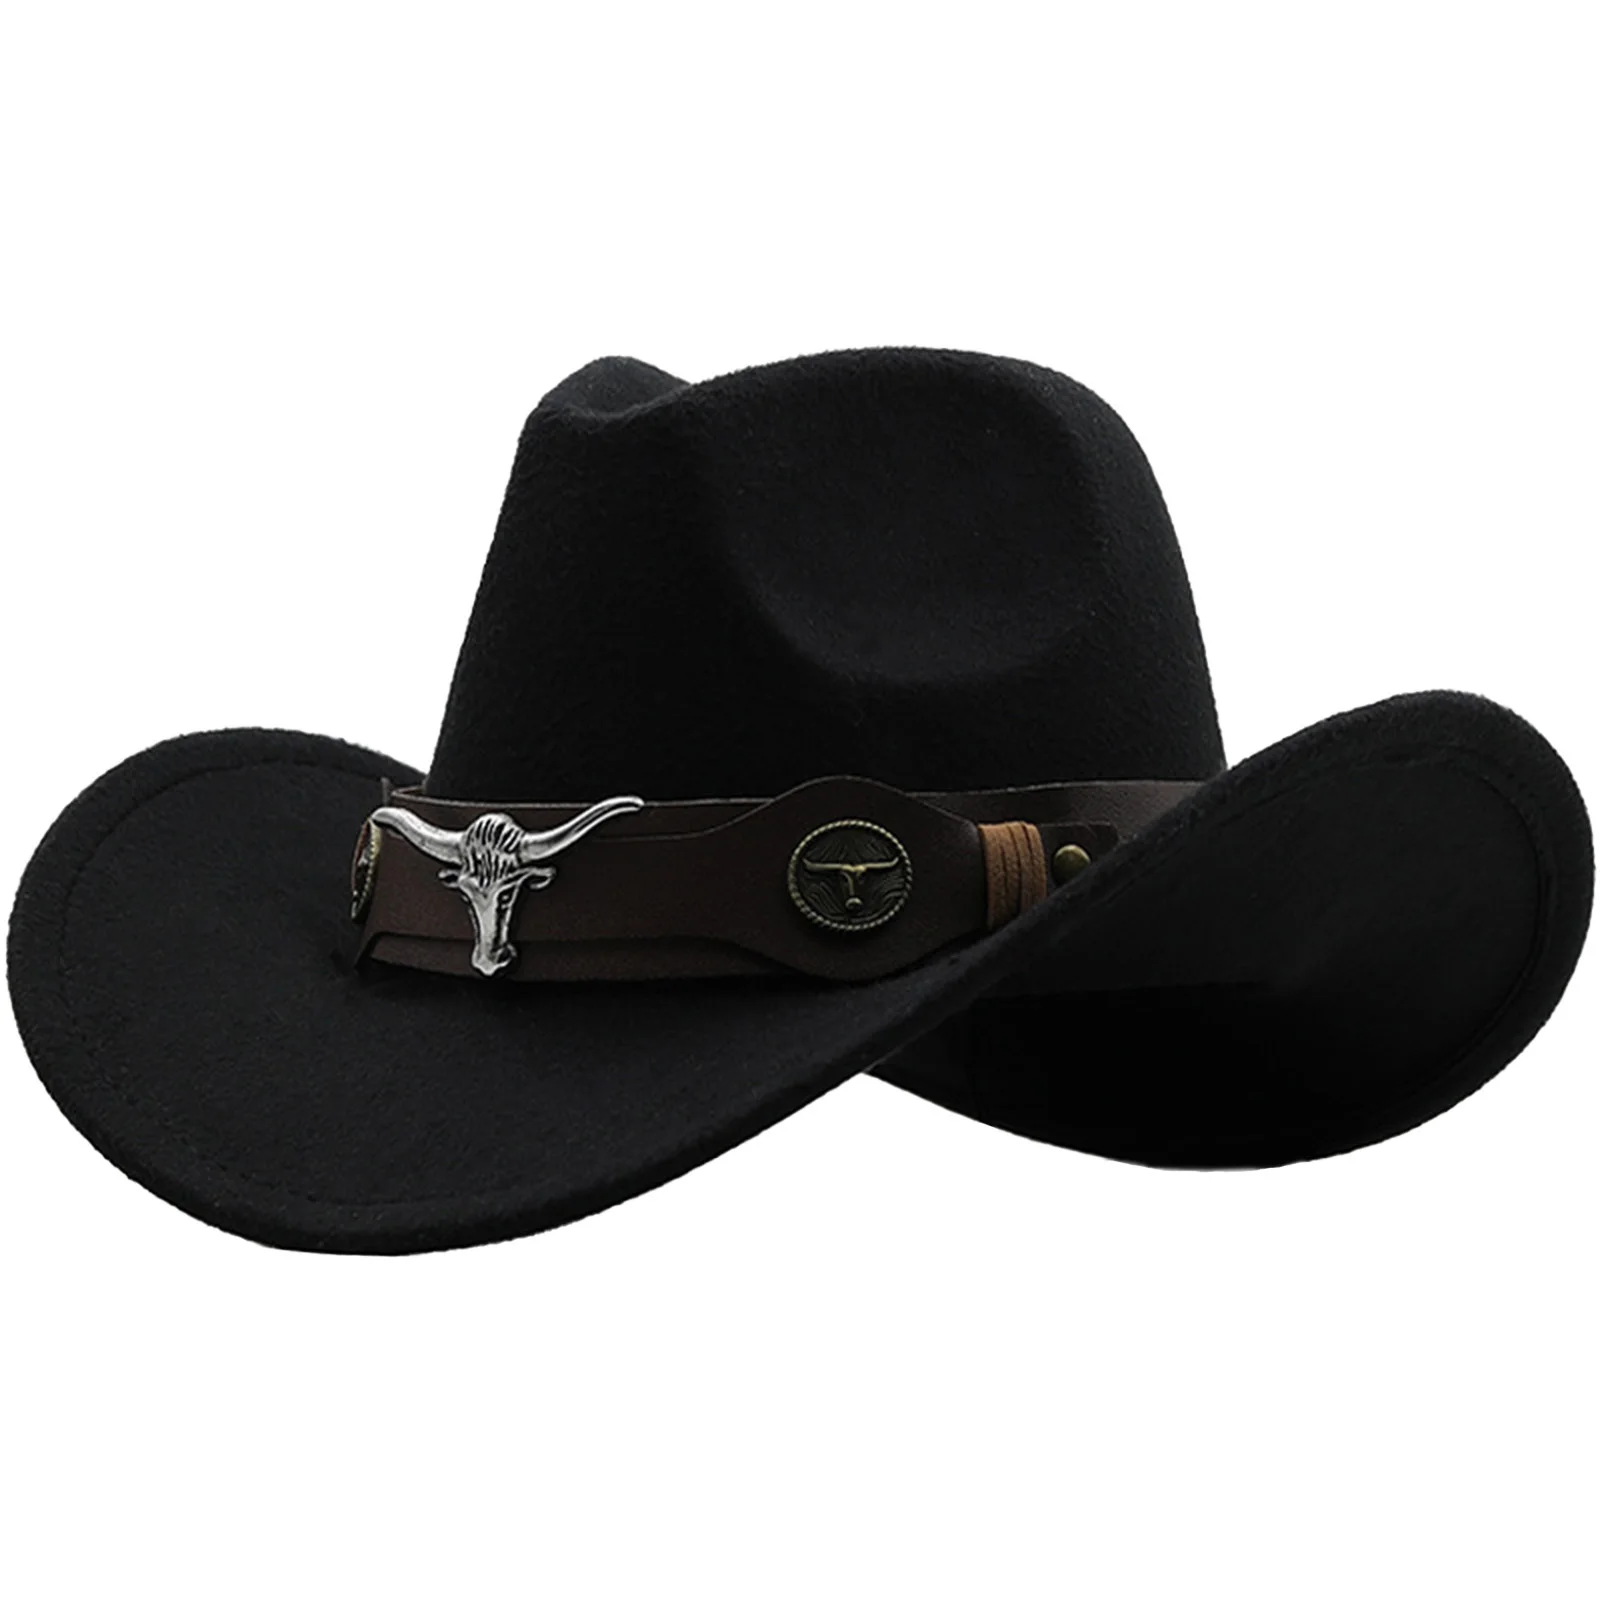 

Western Cowboy Hats Wide Brim Cowboy Cowgirl Panama Hat with Retro Belt n Women and Teens